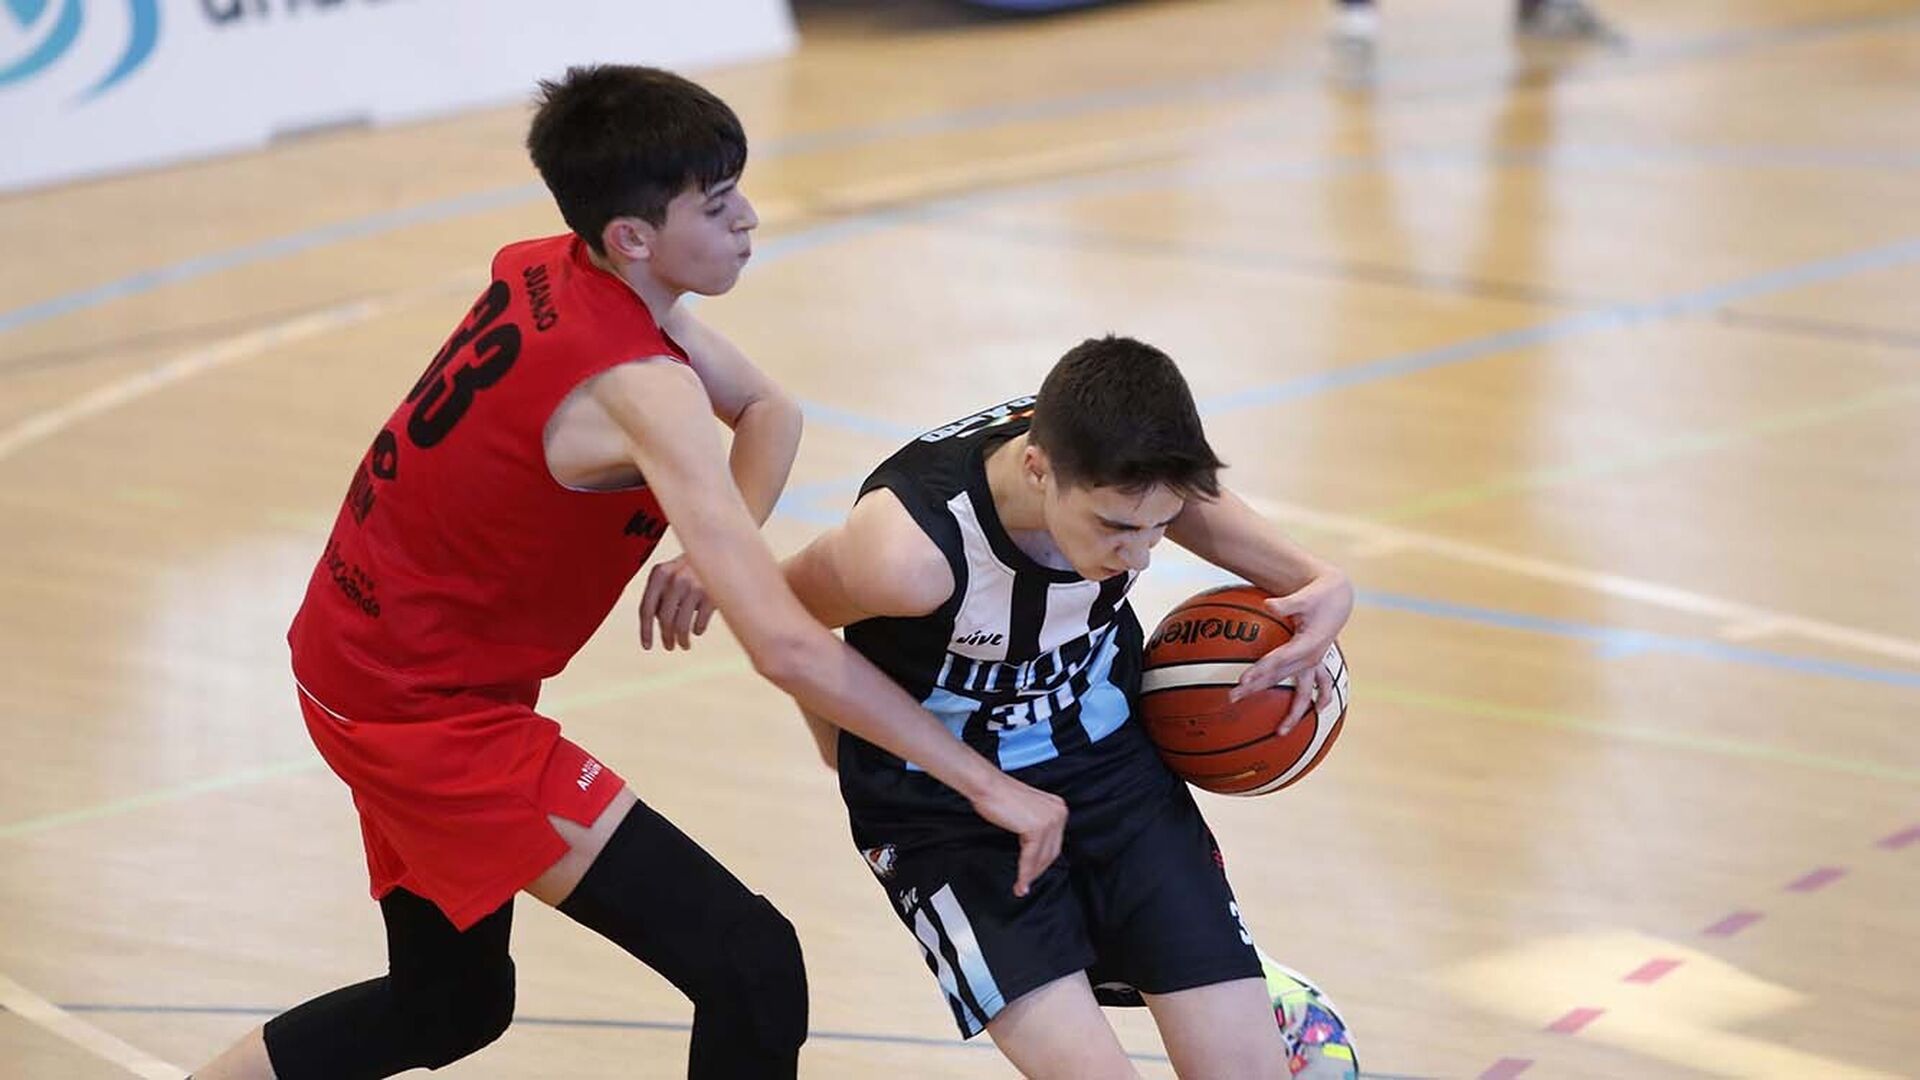 Las fotos del Campeonato de Andaluc&iacute;a de Baloncesto Infantil Masculino, celebrado en La L&iacute;nea